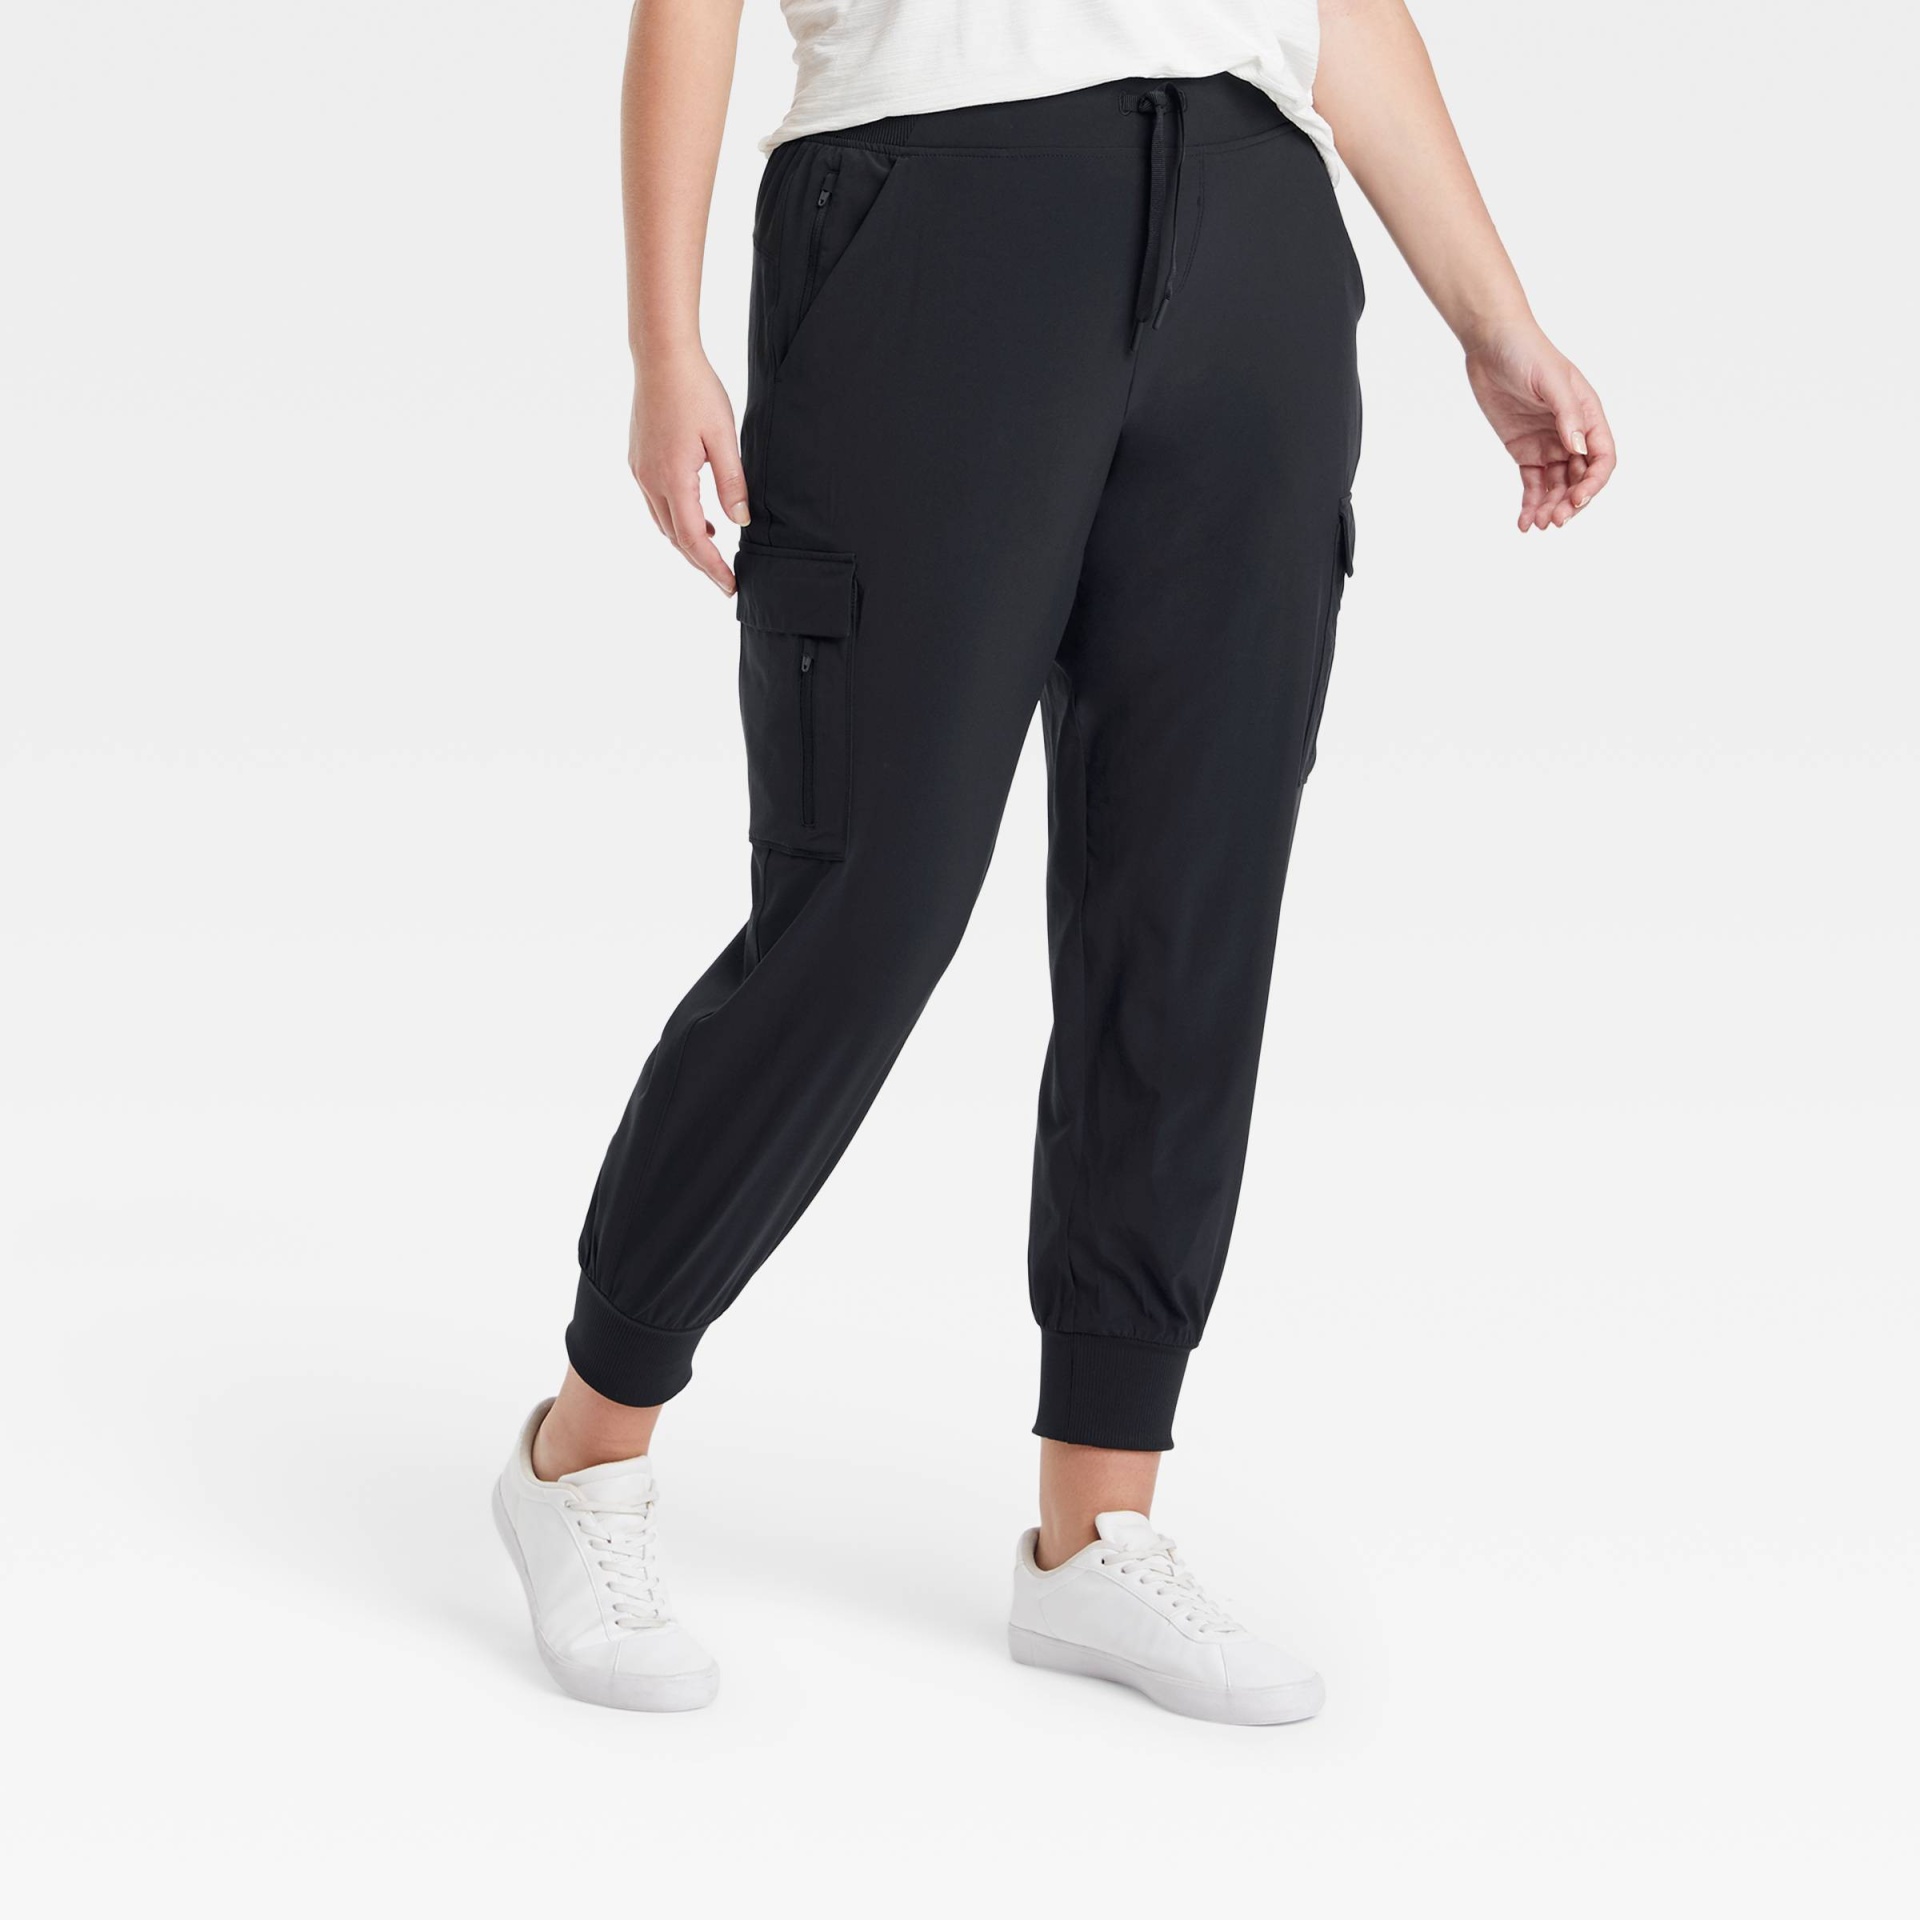 Women's Stretch Woven Wide Leg Cargo Pants - All in Motion Black XXL 1 ct